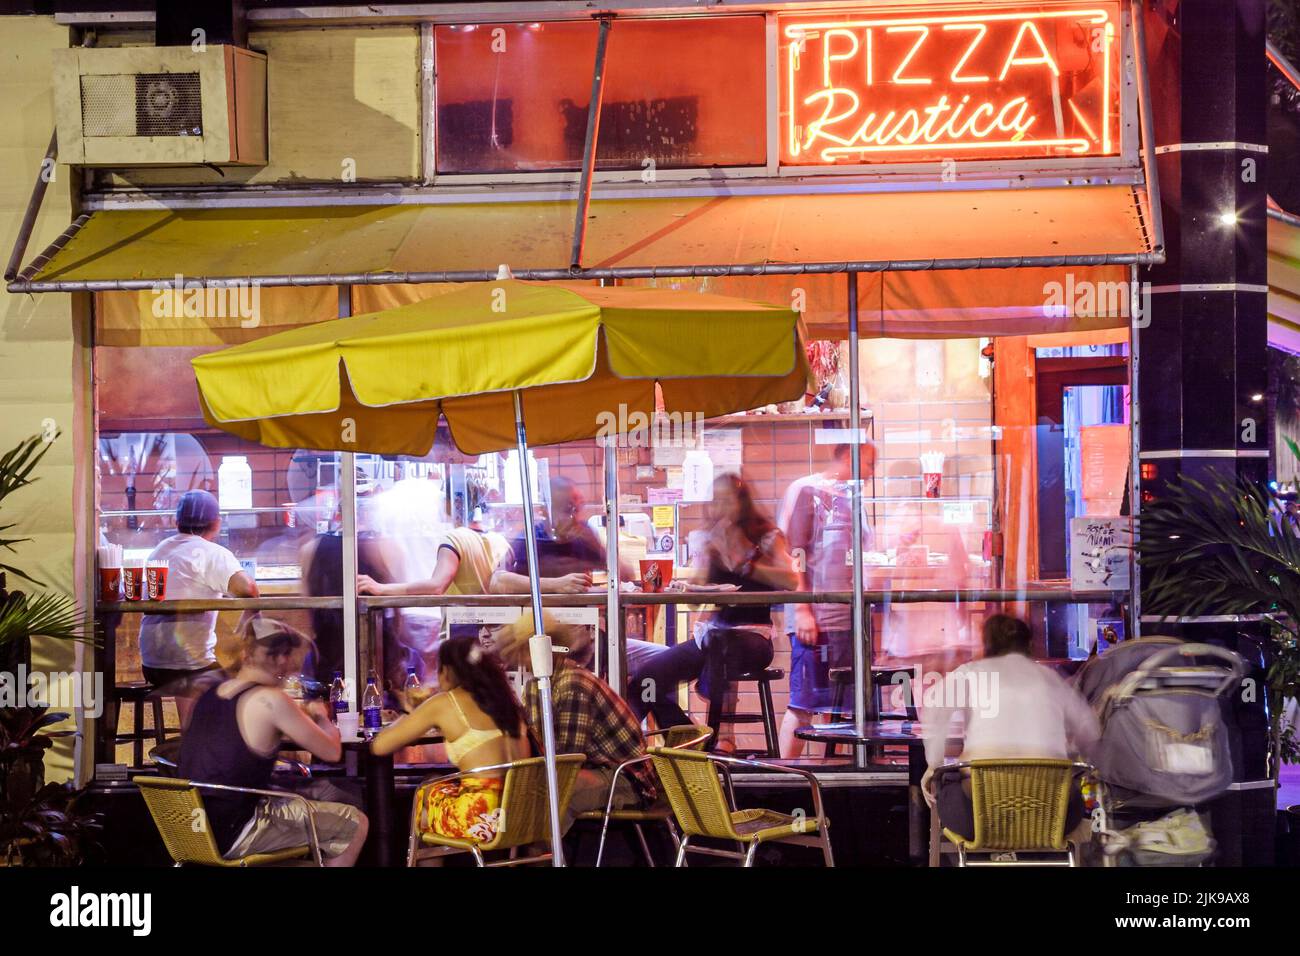 Miami Beach Florida,Collins Avenue,Pizza Rustica,Italian restaurant restaurants pizzeria,dining parlor al fresco,night nightlife evening group people Stock Photo